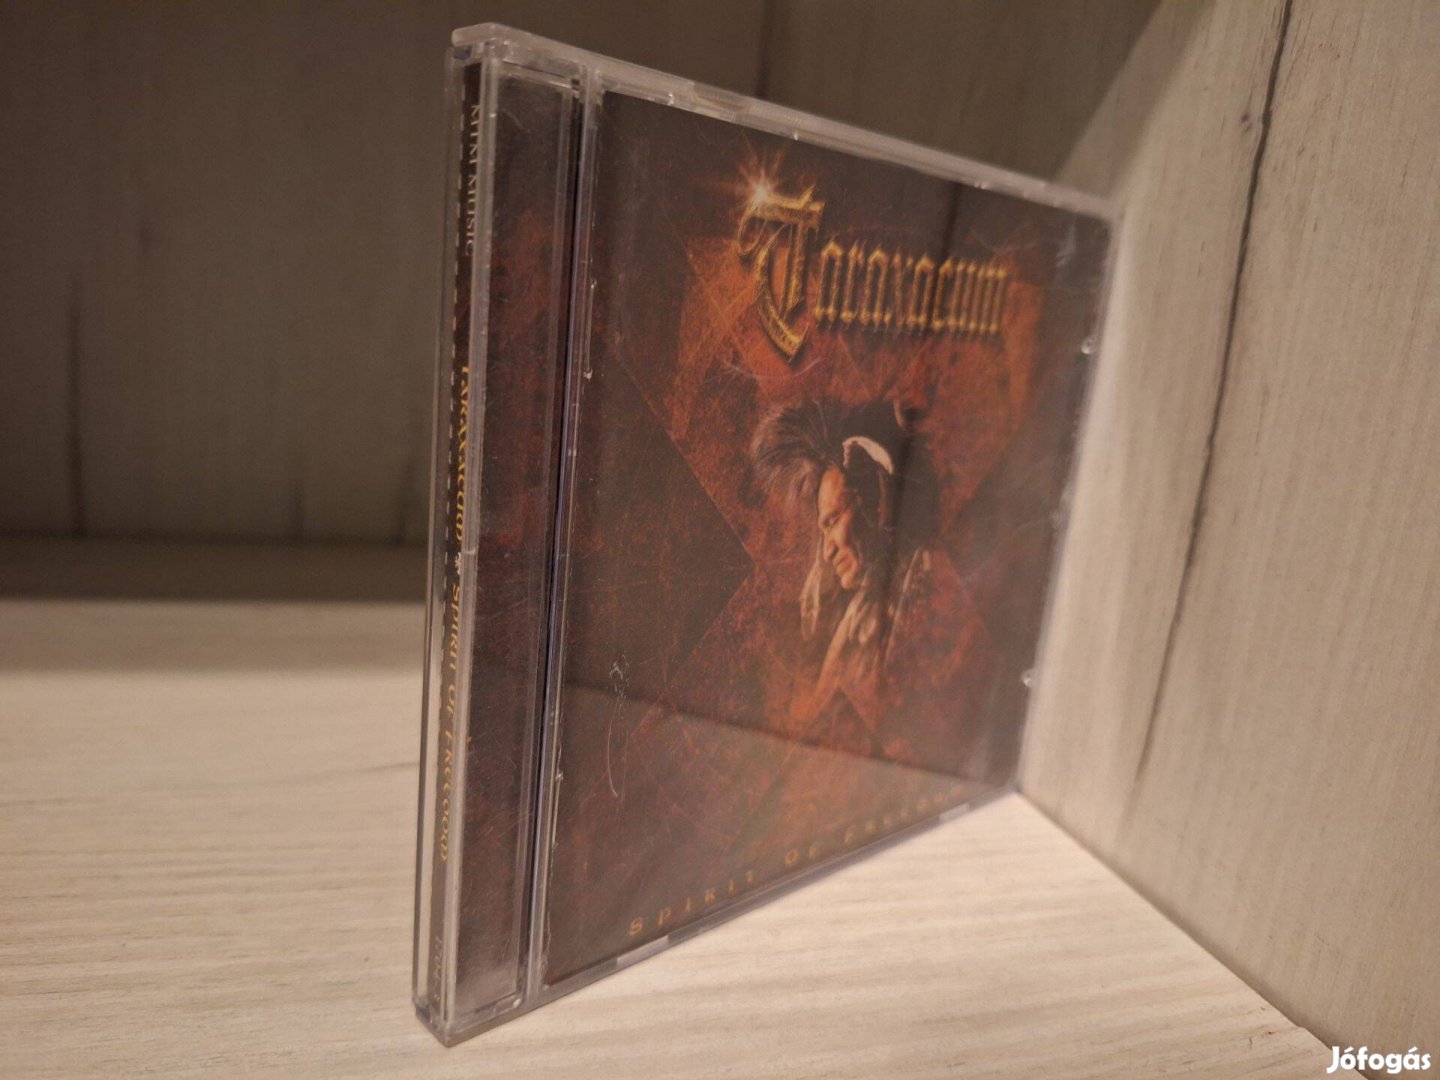 Taraxacum - Spirit Of Freedom CD